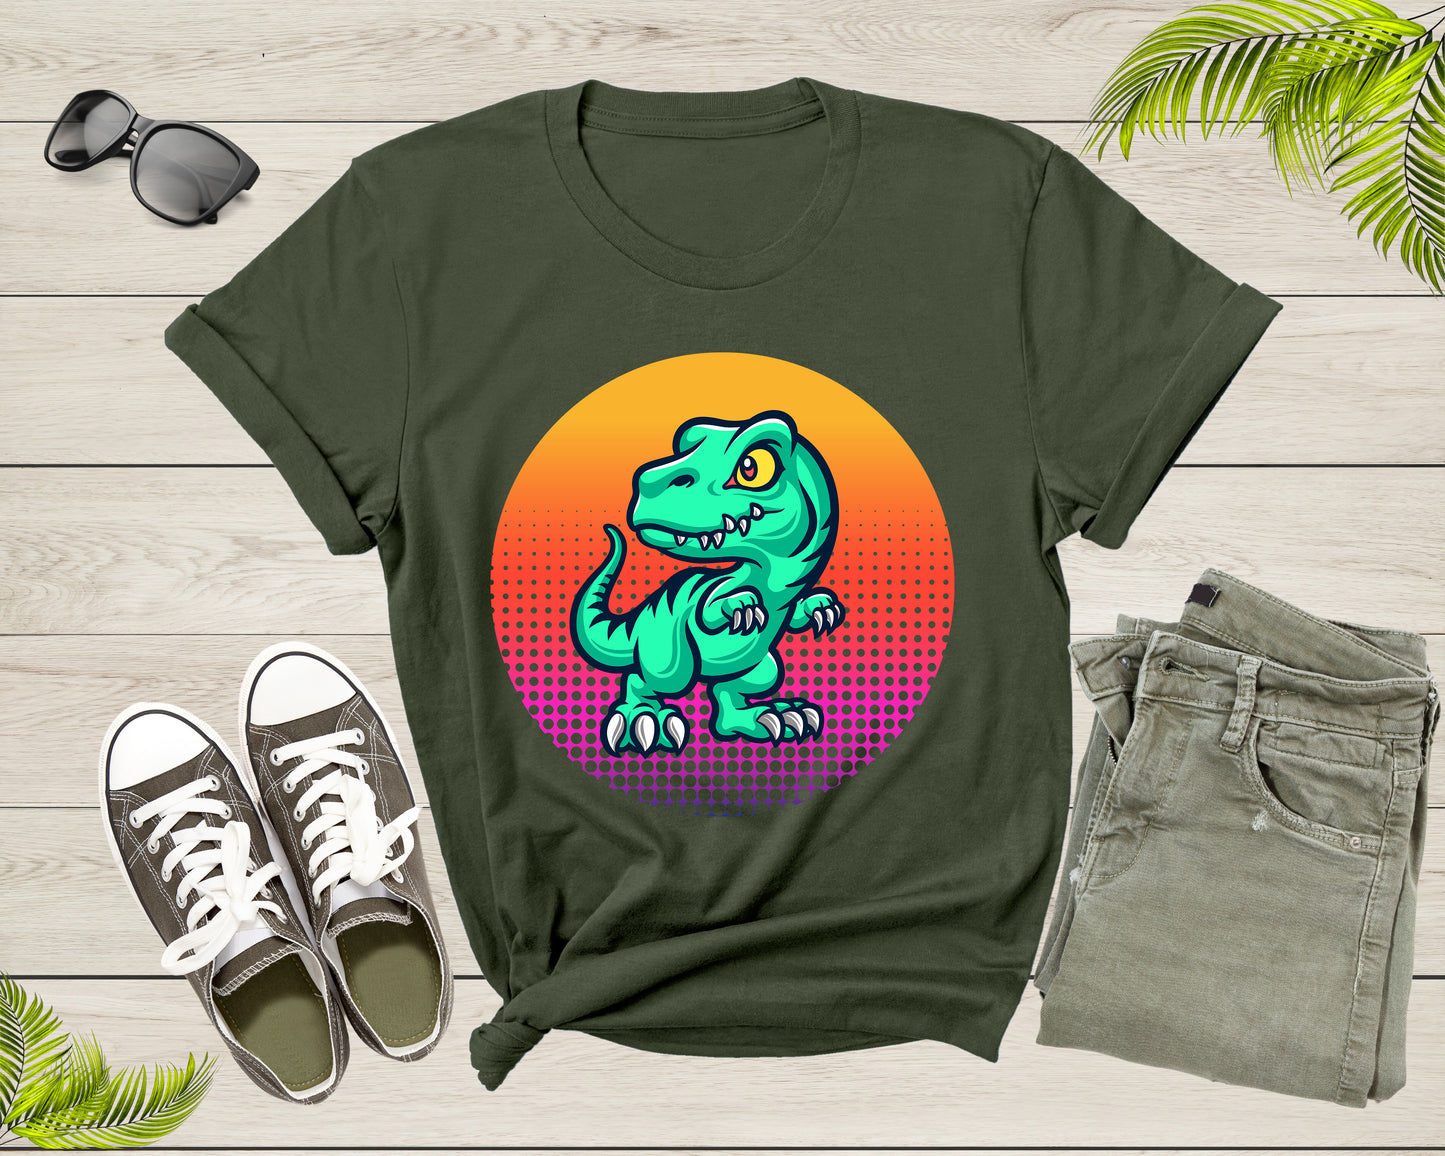 Cool Dinosaur T-Rex Animal Bird at Sunset for Men Women Kids T-Shirt Dino T Shirt Gift for Men Women Kids Boys Girls Cute Trex Dino Tshirt